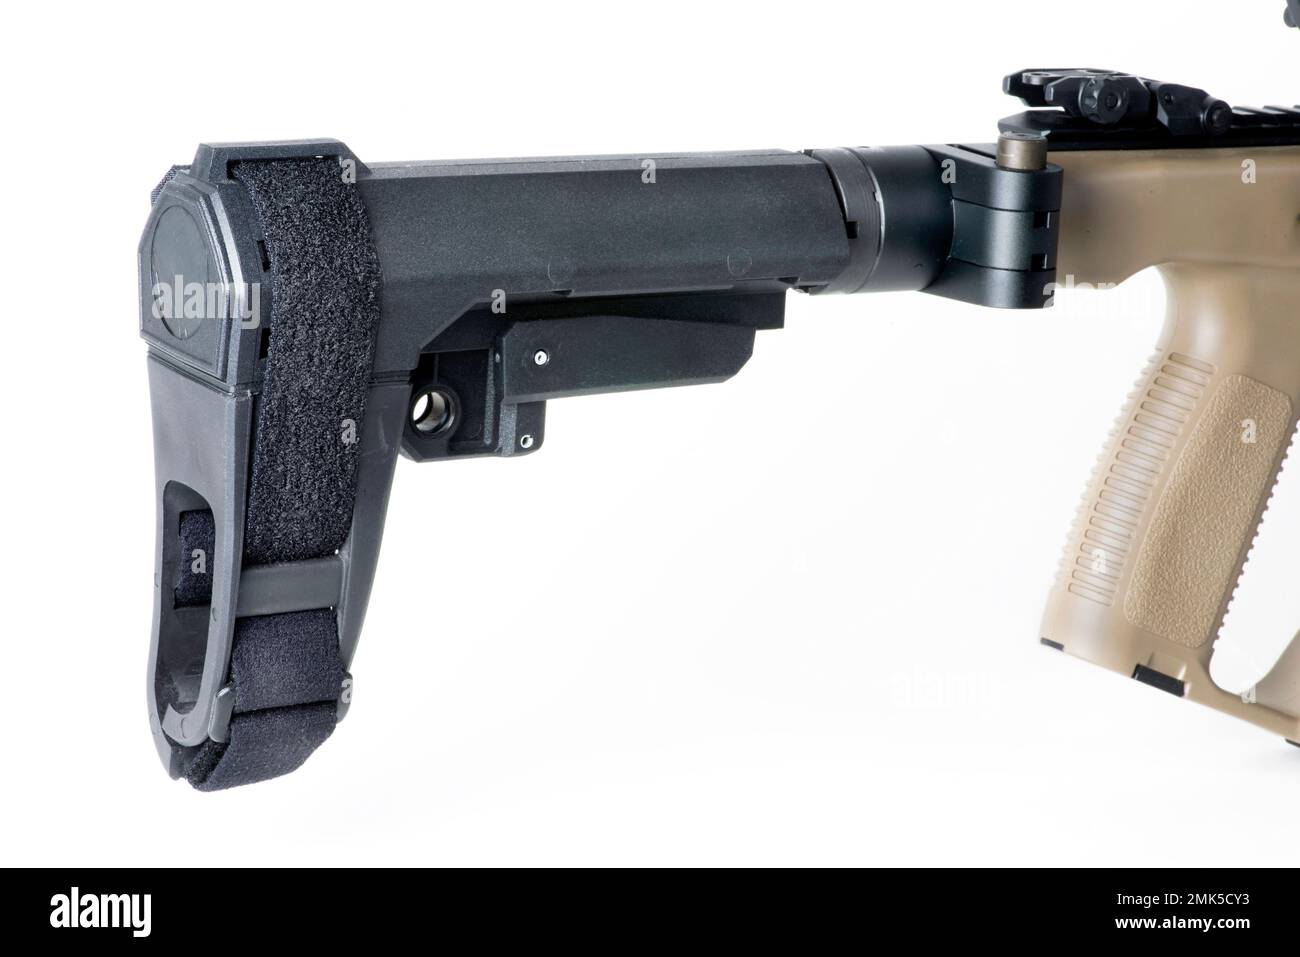 Banned folding pistol brace on 9mm pistol. Stock Photo